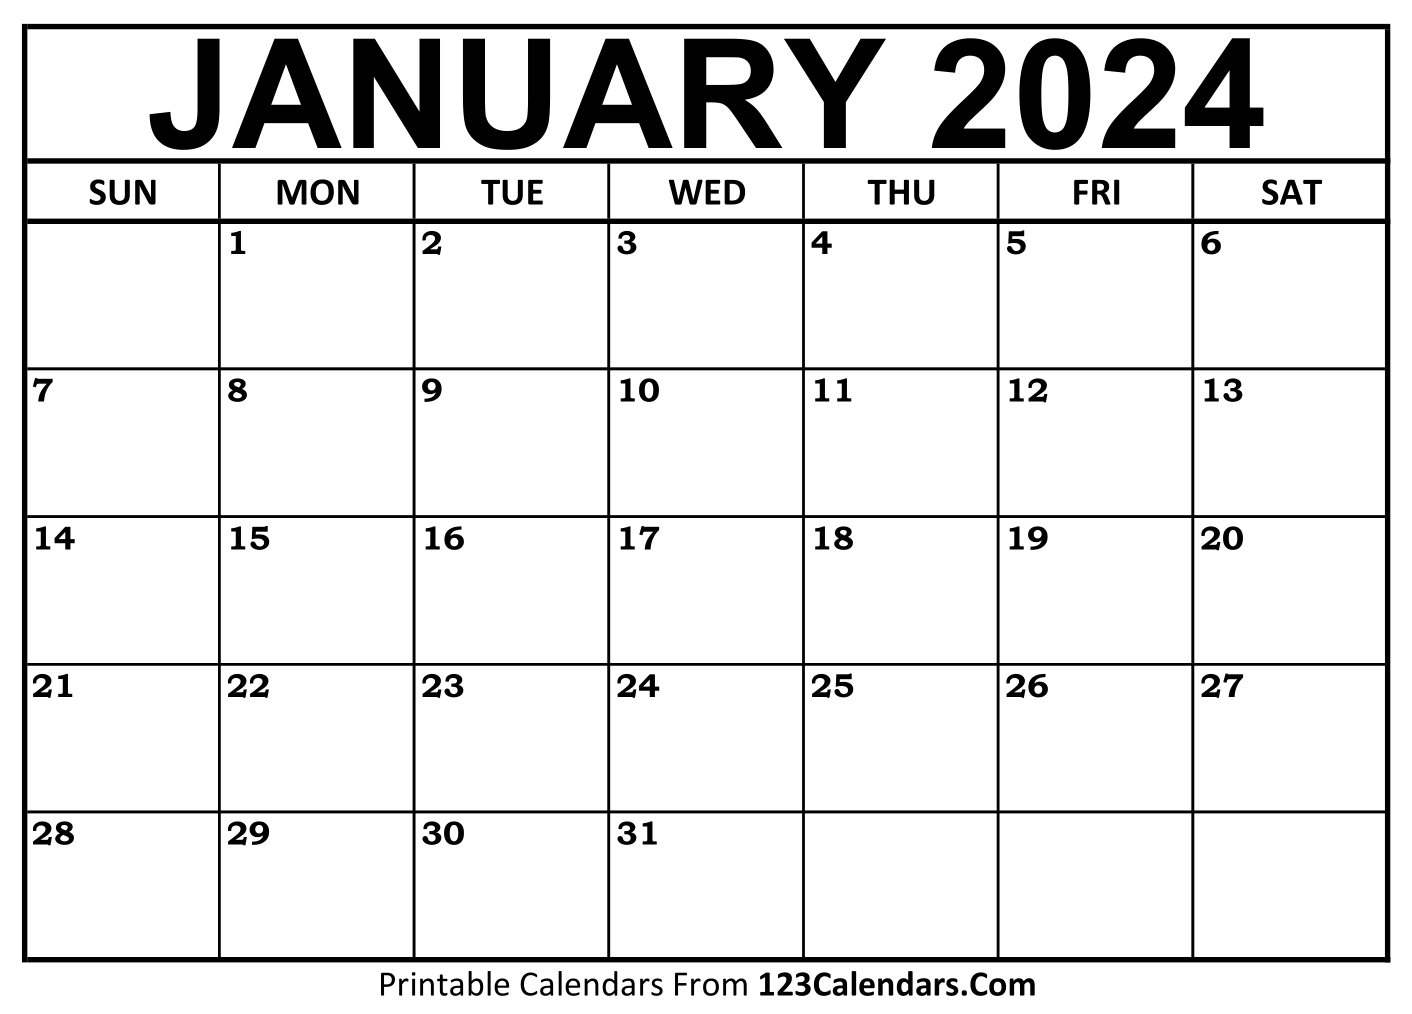 Printable January 2024 Calendar Templates - 123Calendars | Jan 2024 Calendar Printable Free